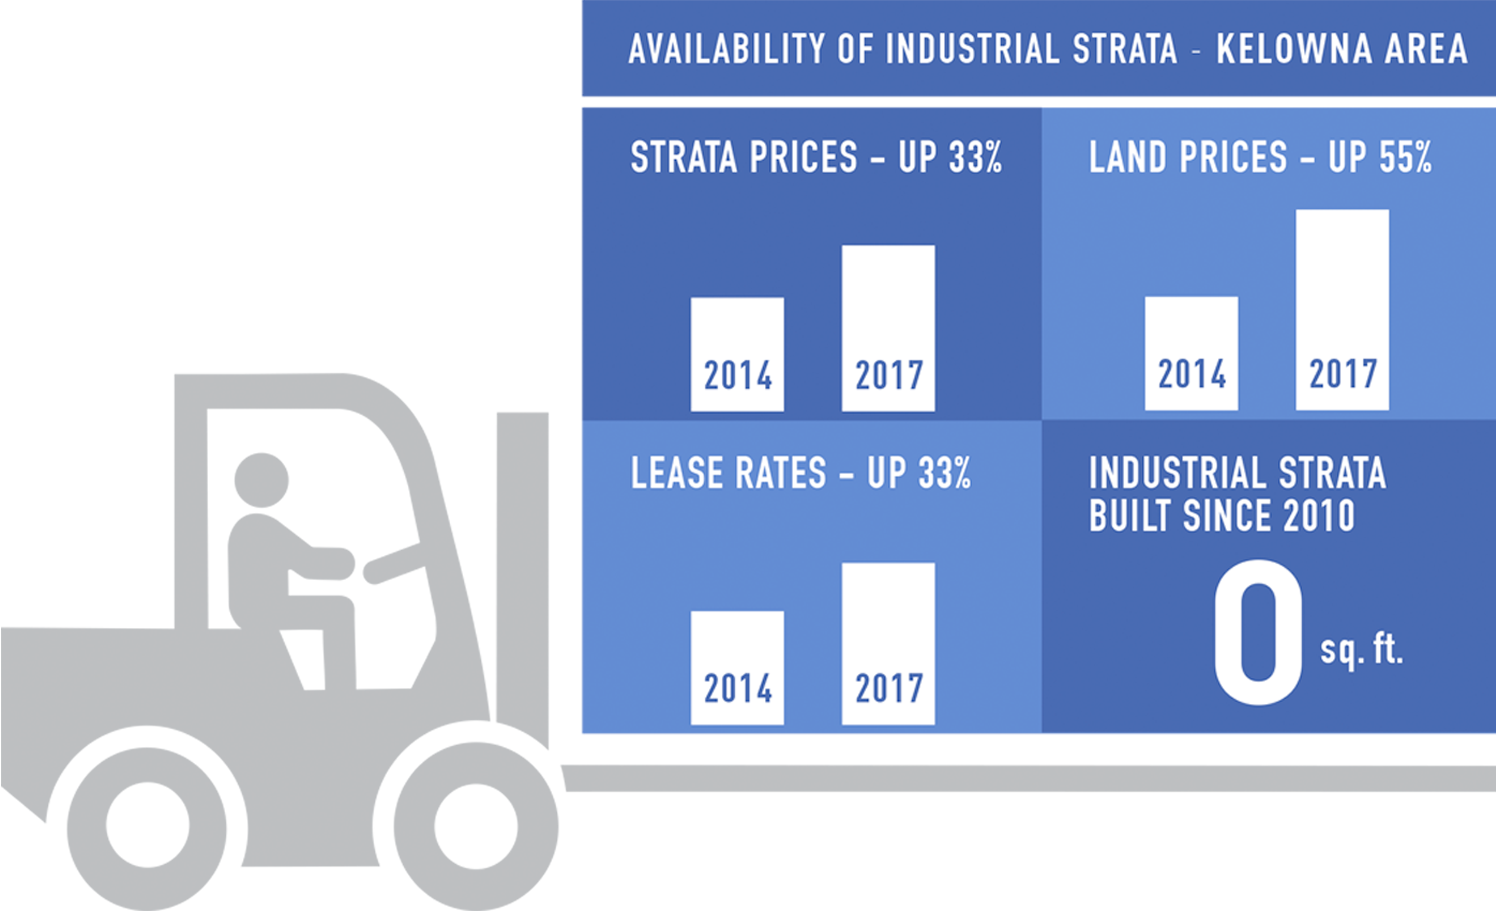 Availability of Industrial Strata - Kelowna Area